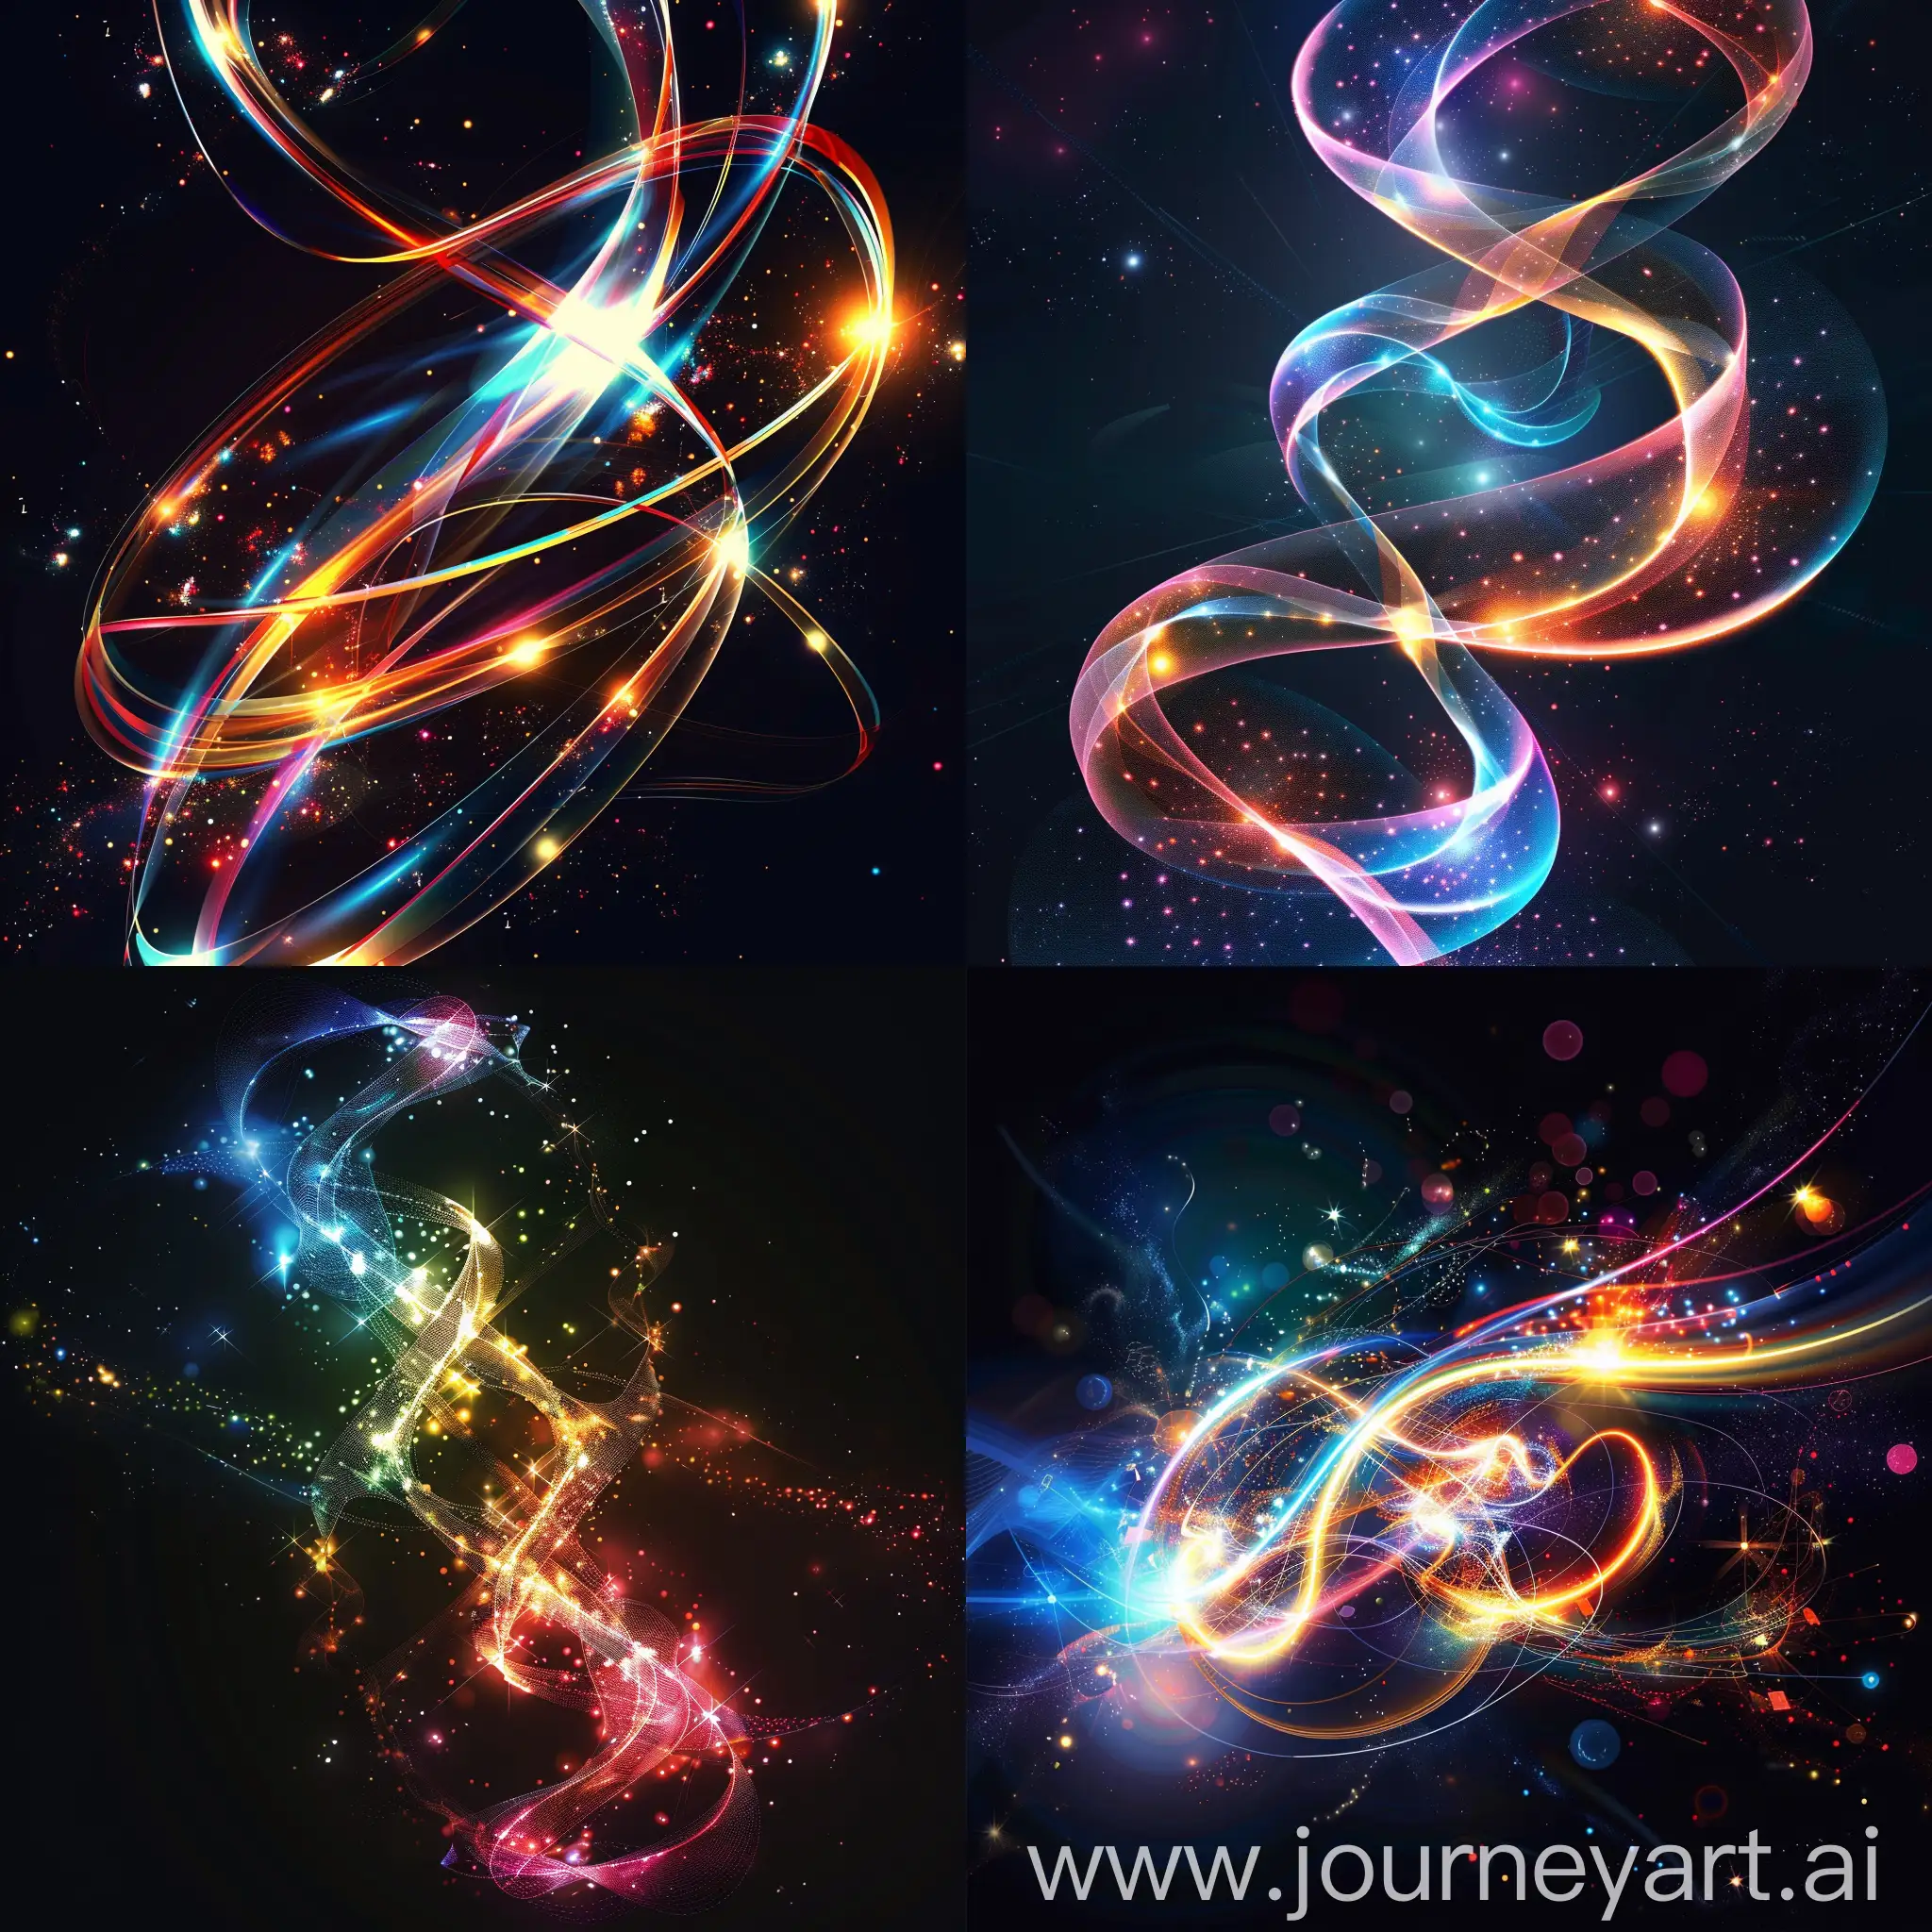 Vibrant-UltraDesign-Ribbons-Amidst-Cosmic-Dark-Universe